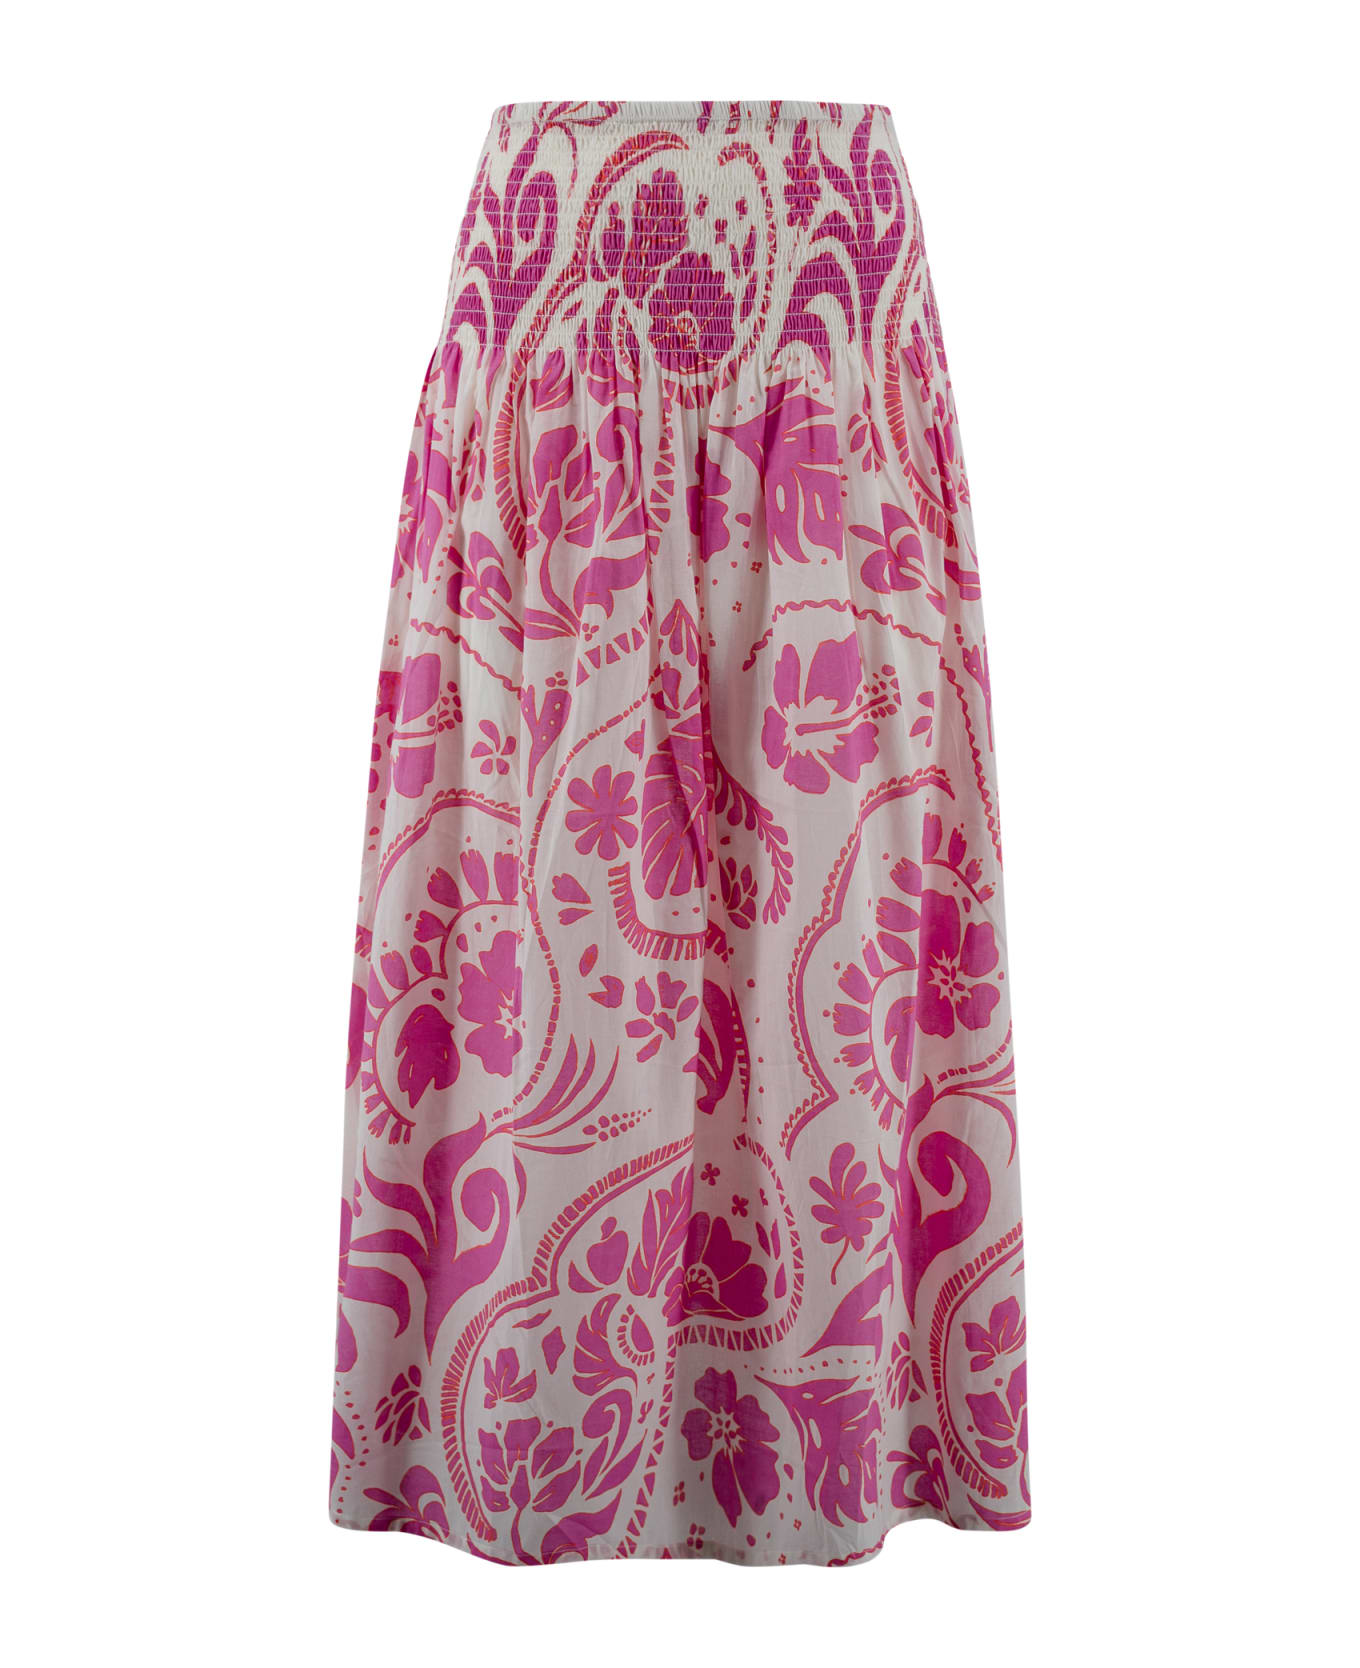 Surkana Long Skirt With Elastic Gathers At The Waist - Fuchsia